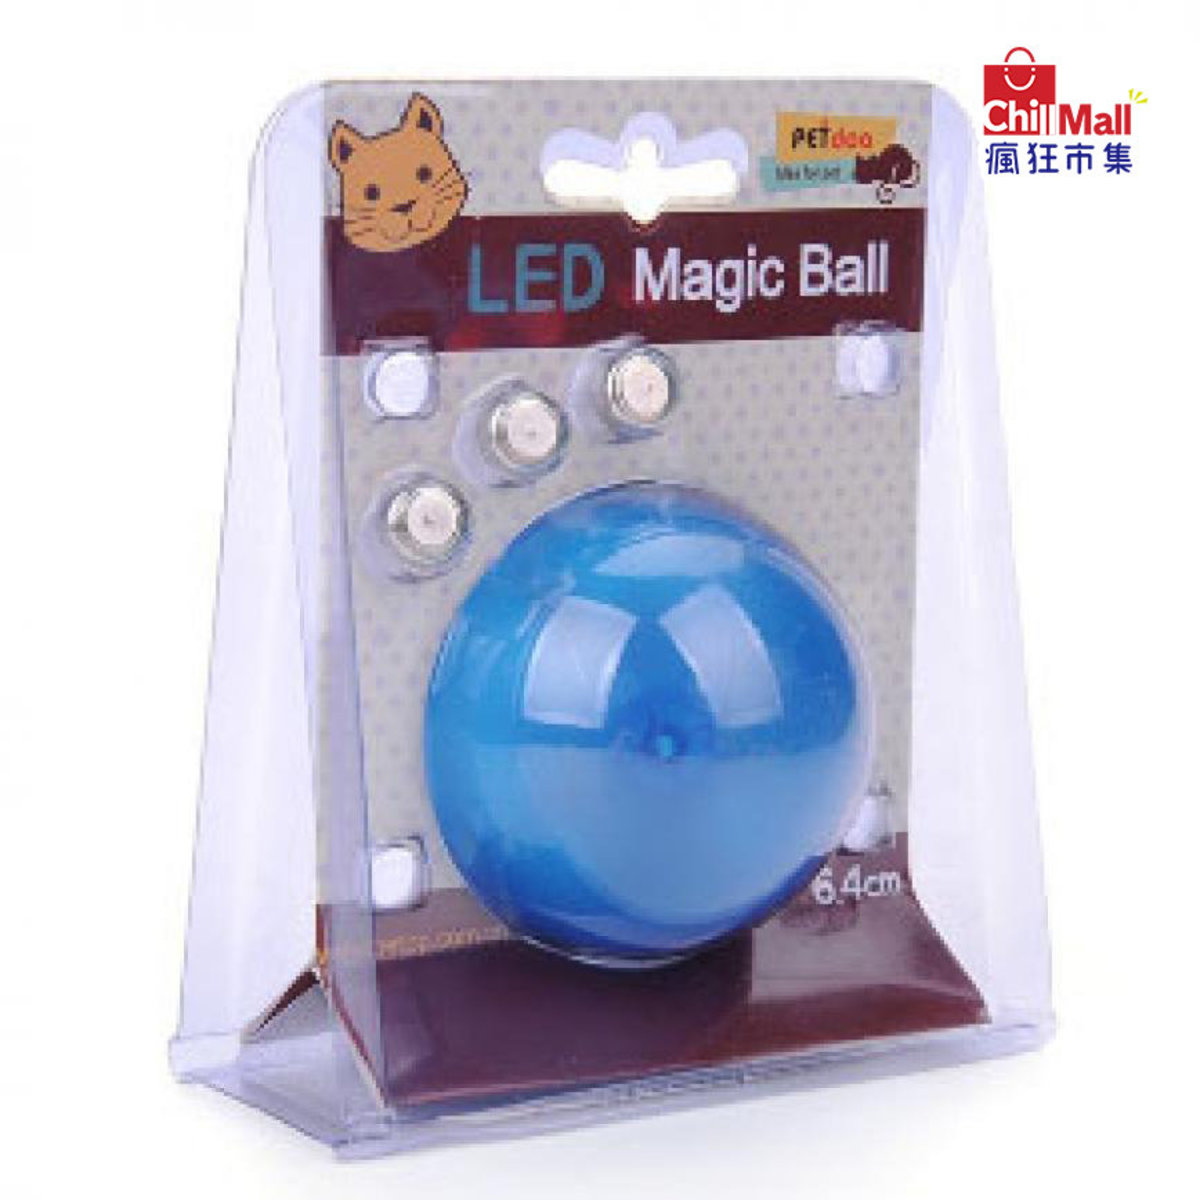 LED 閃光滾動發光球逗貓玩具 (藍)